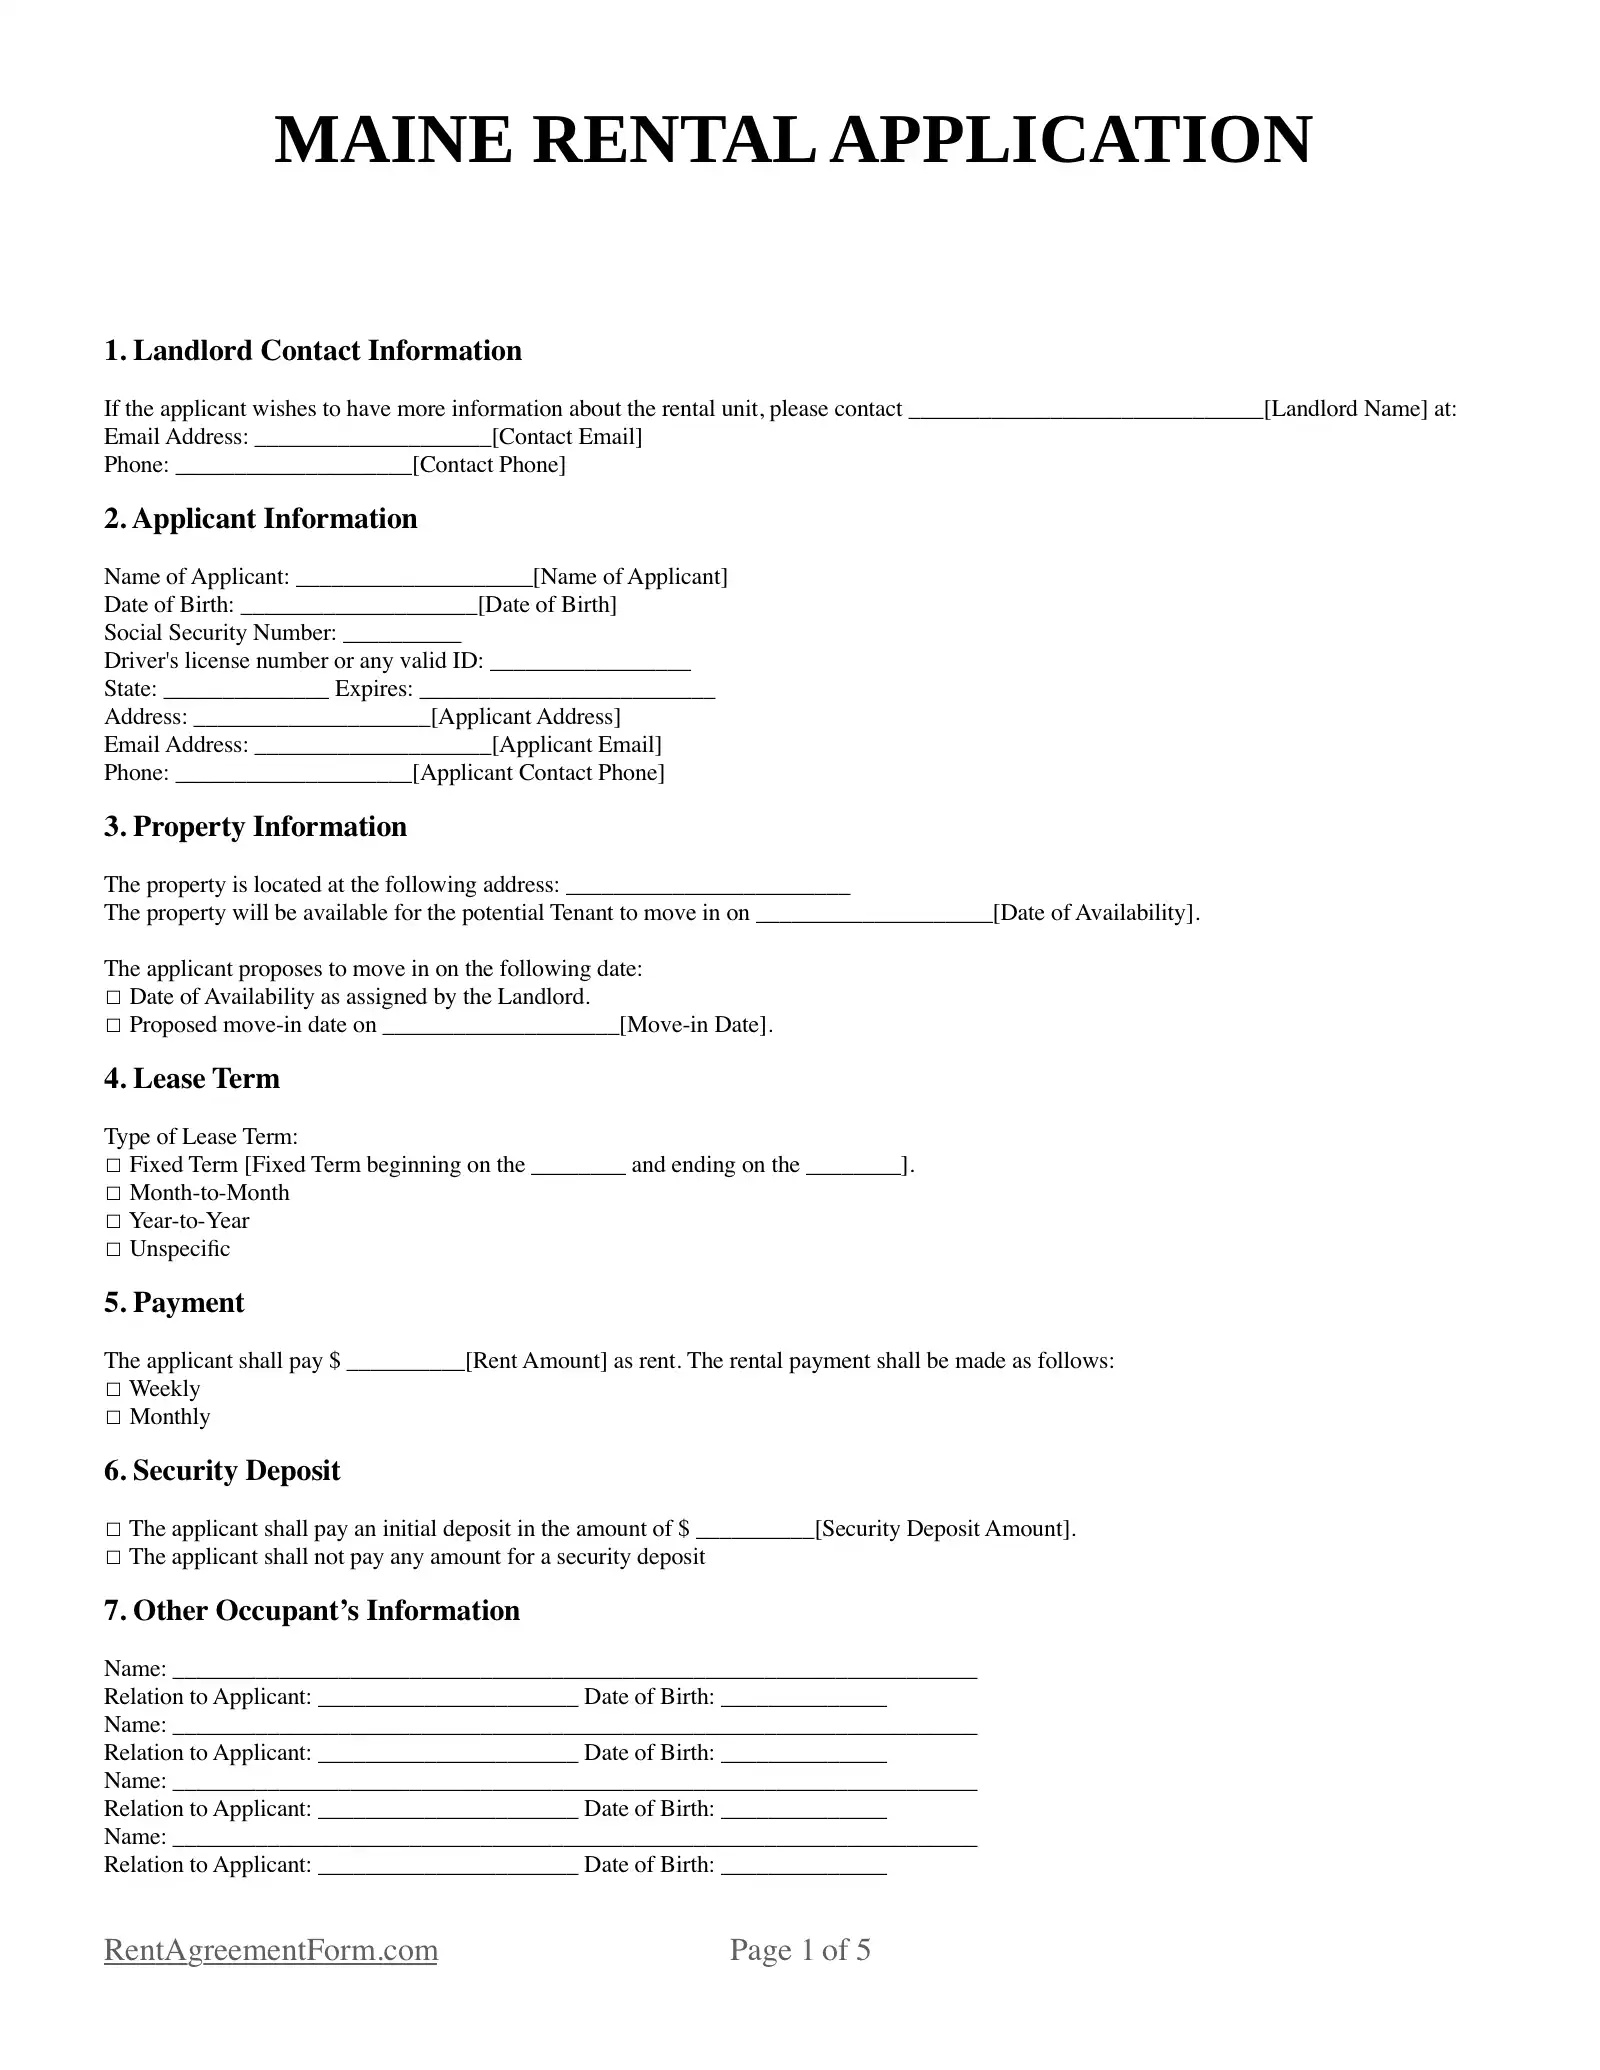 Maine Rental Application Sample